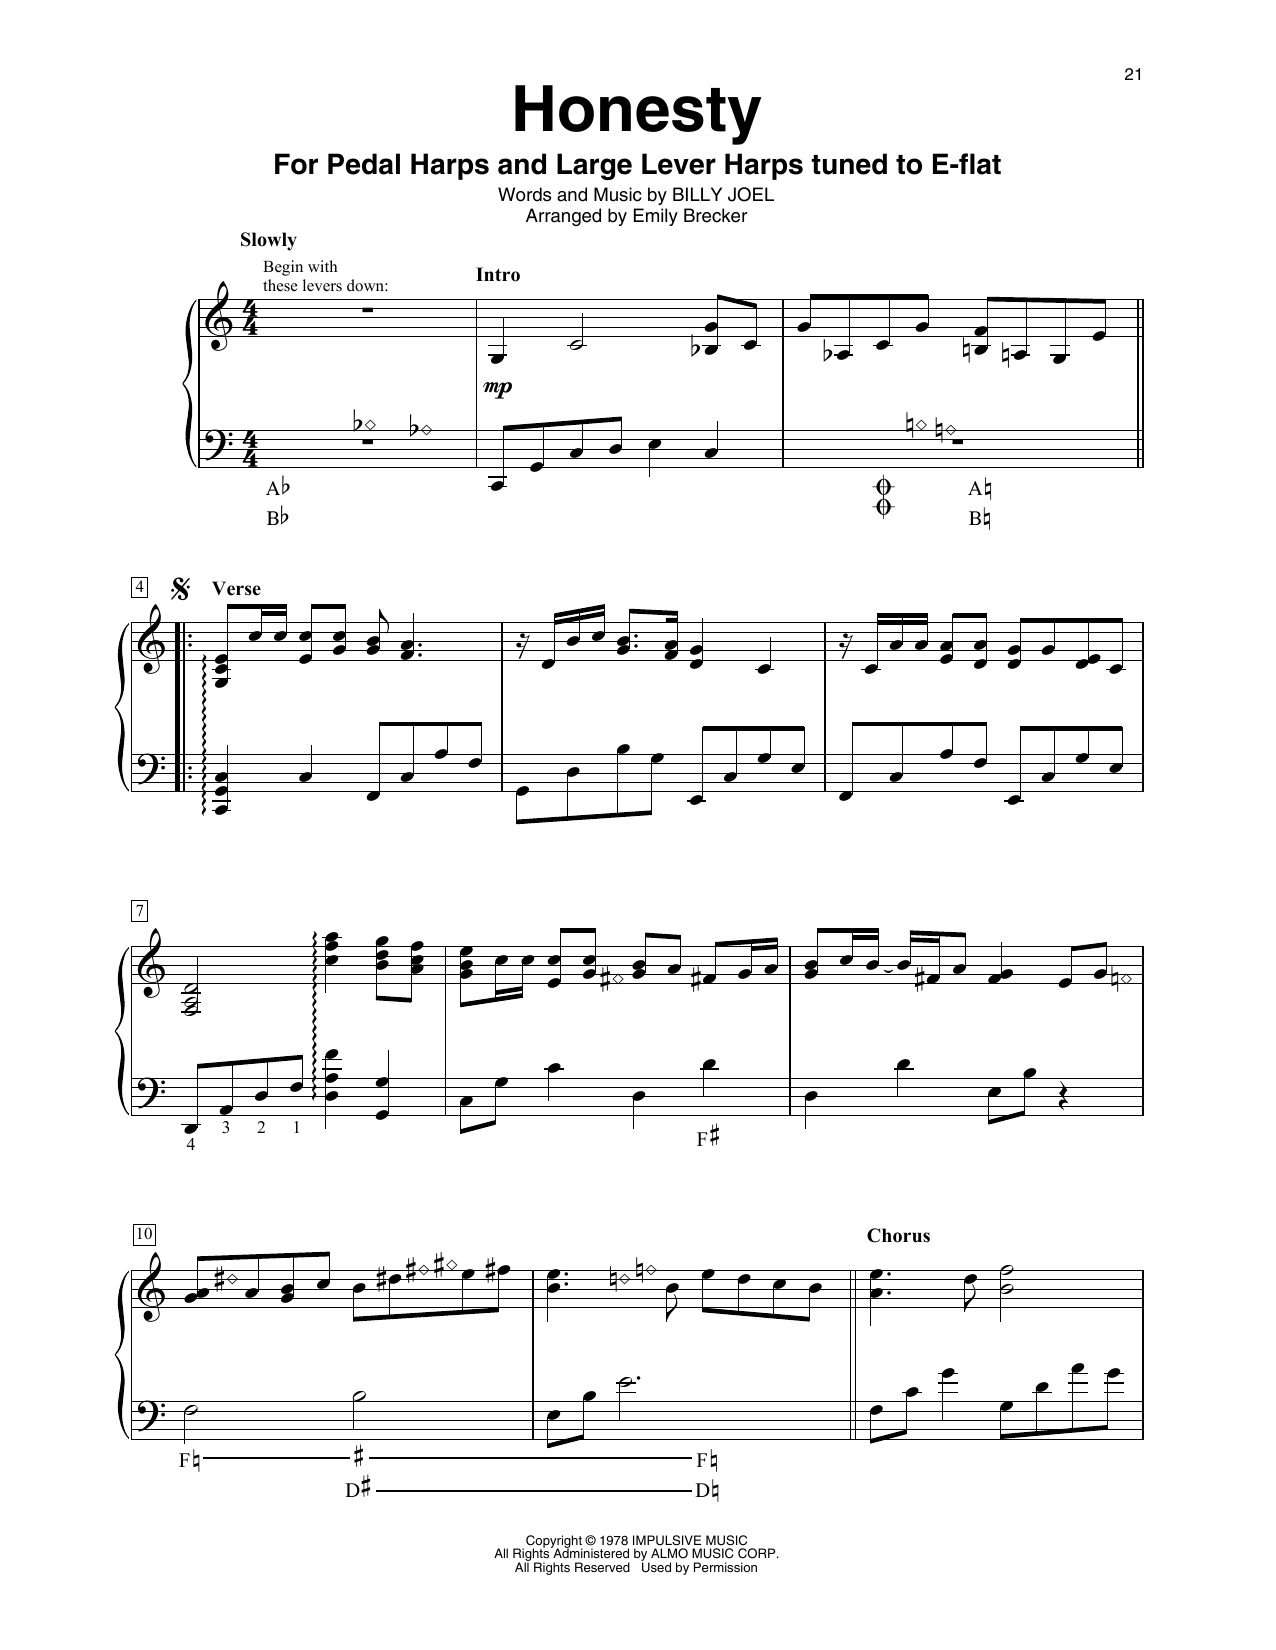 Billy Joel Honesty (arr. Emily Brecker) Sheet Music Notes & Chords for Harp - Download or Print PDF